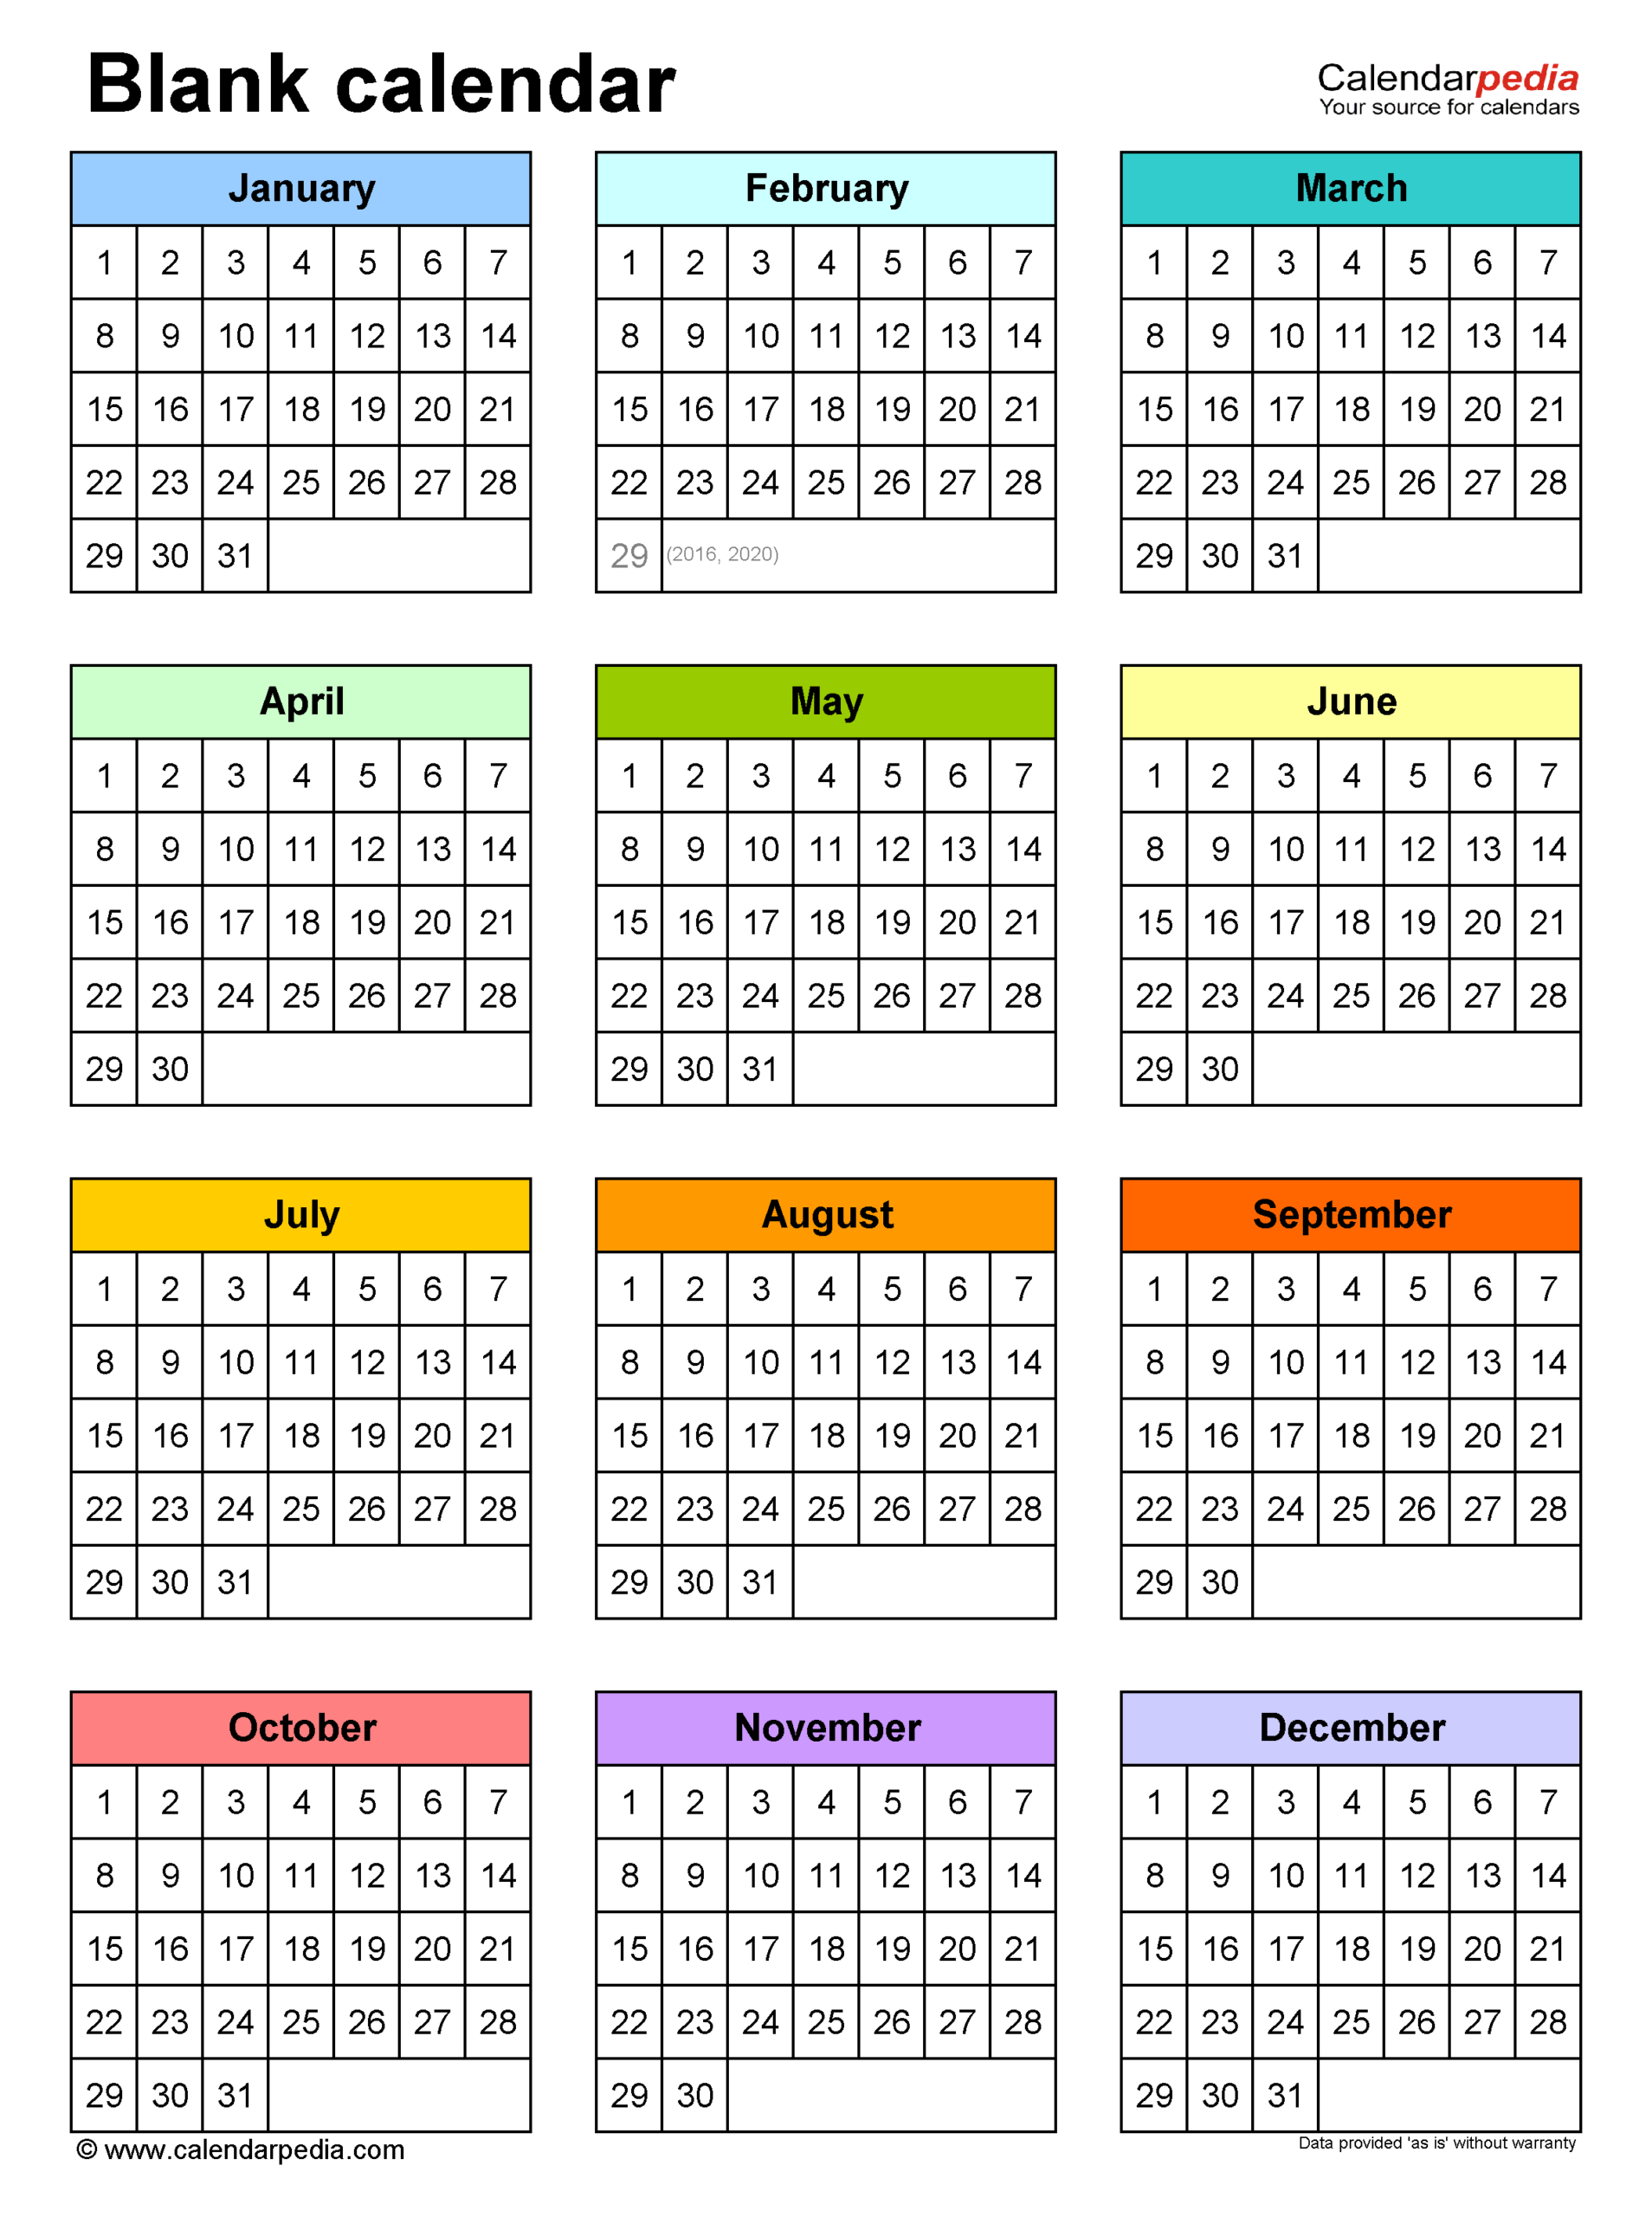 Blank Calendars - Free Printable Microsoft Excel Templates